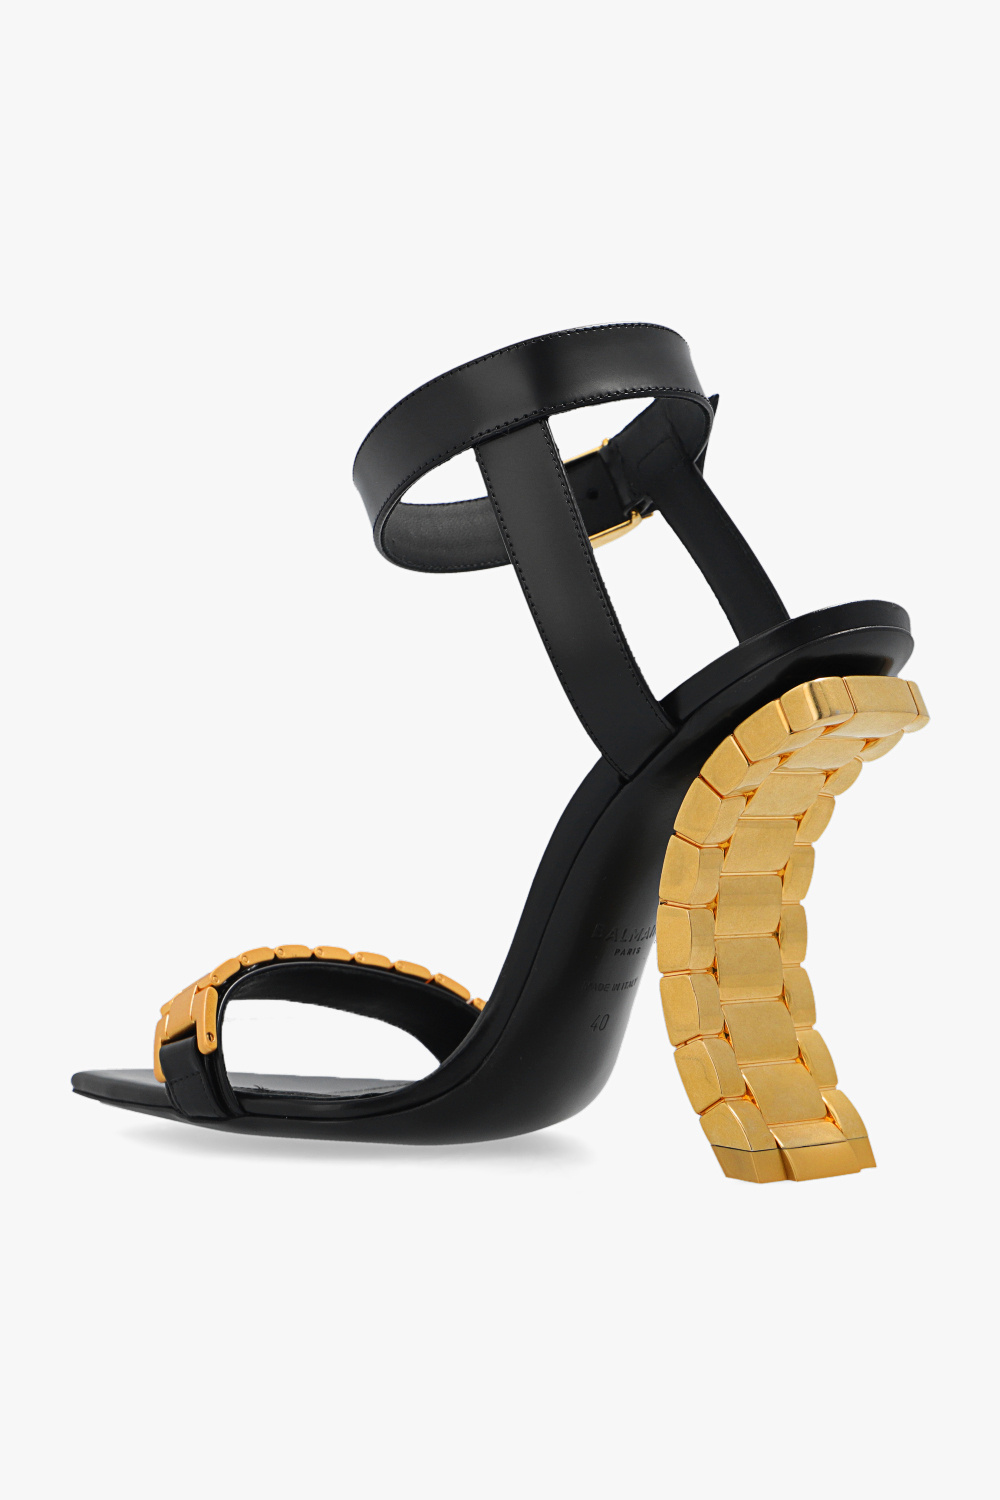 Balmain Sandals on decorative heel